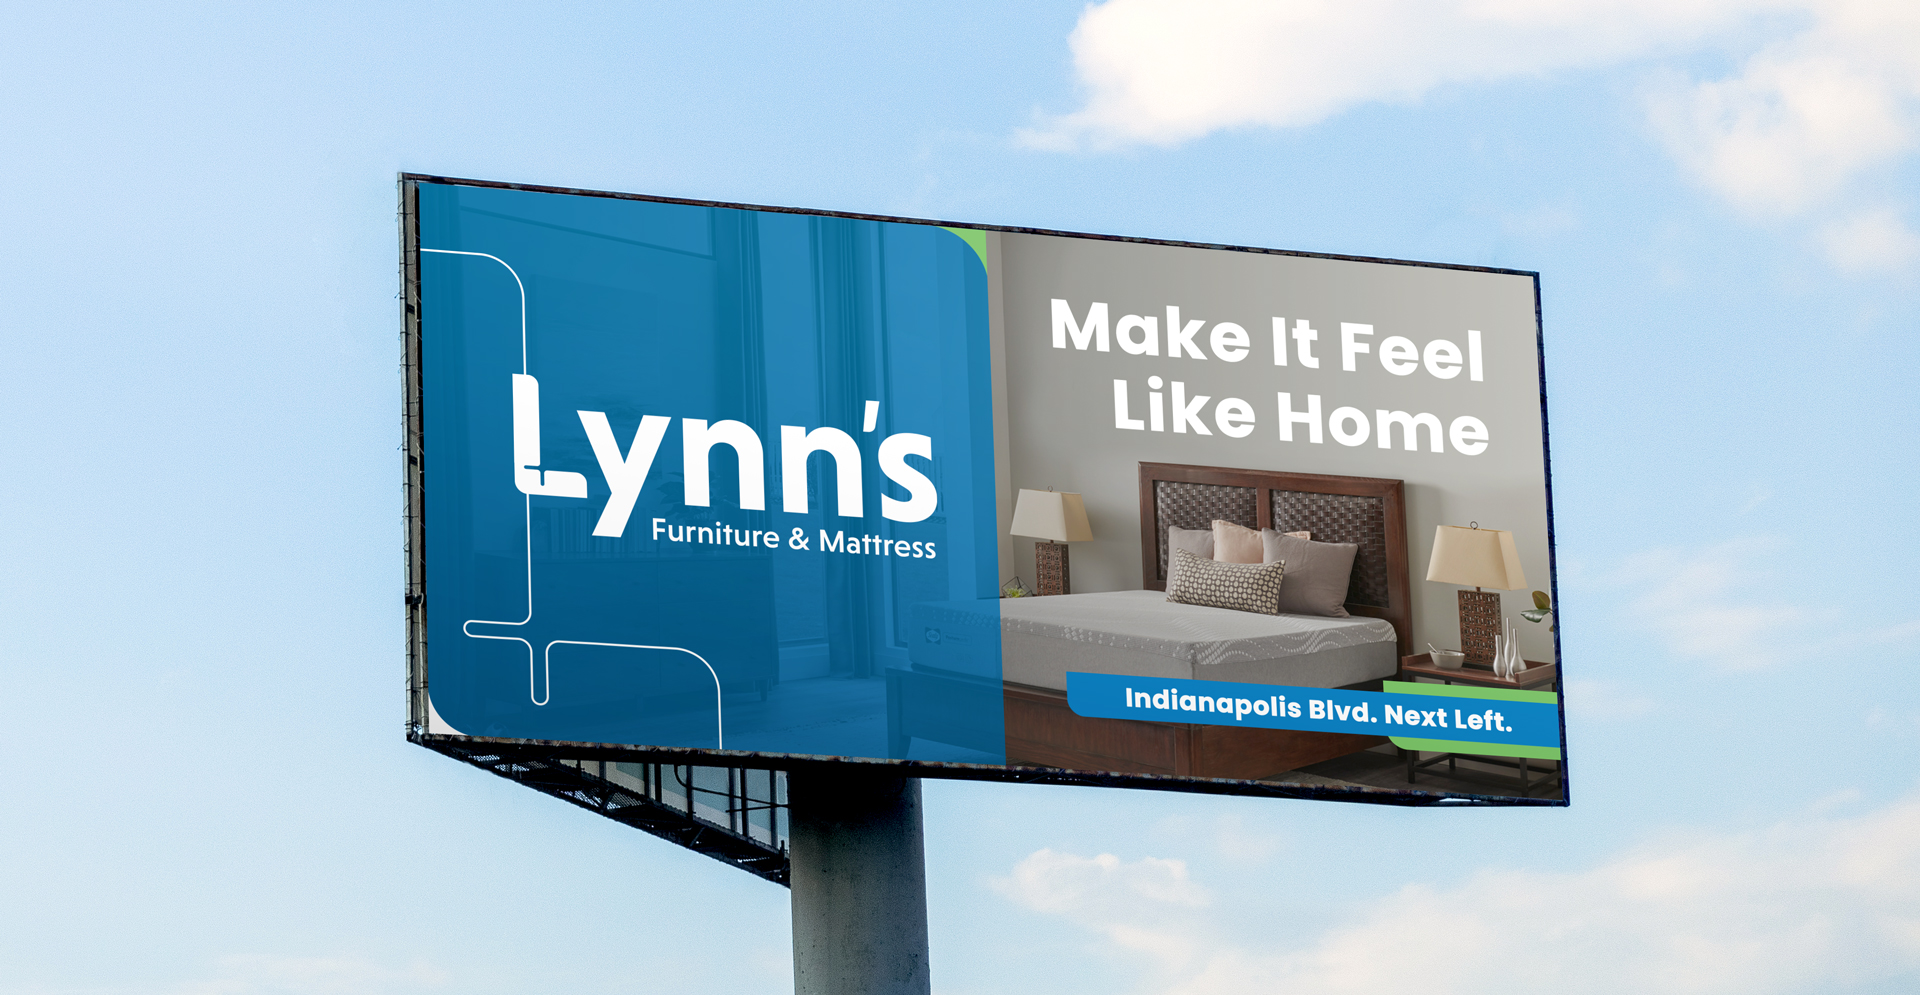 Billboard advertisement design for furniture & mattress store